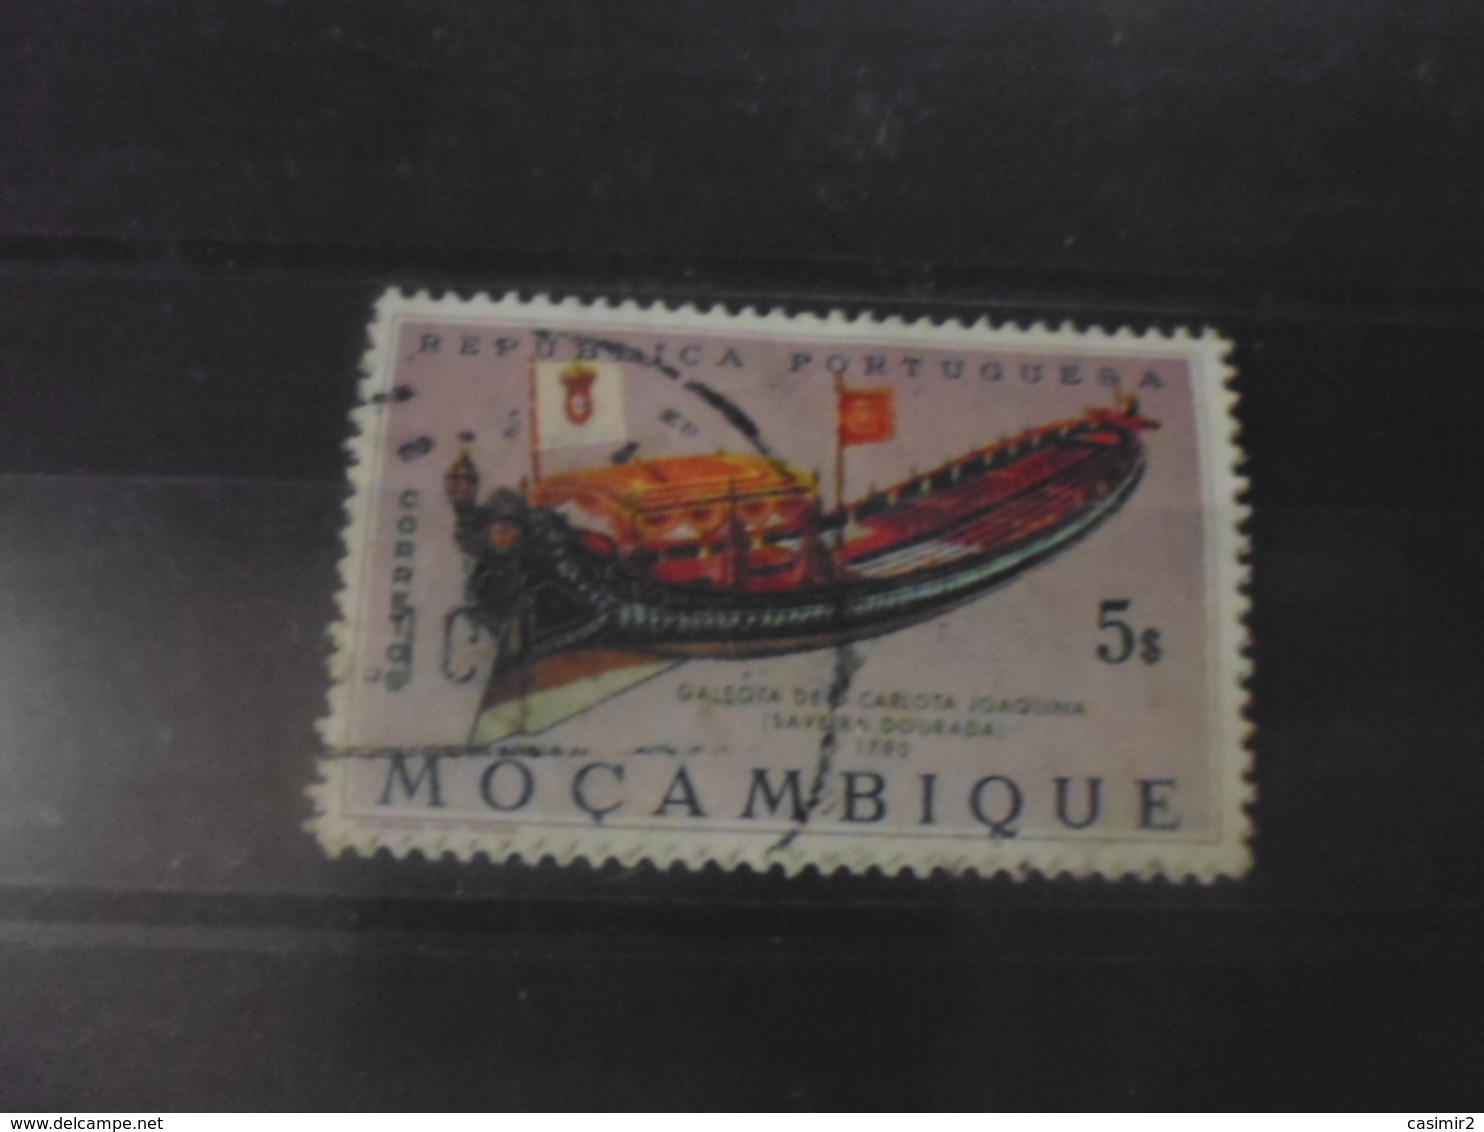 MOZAMBIQUE YVERT N° 517 - Mozambique